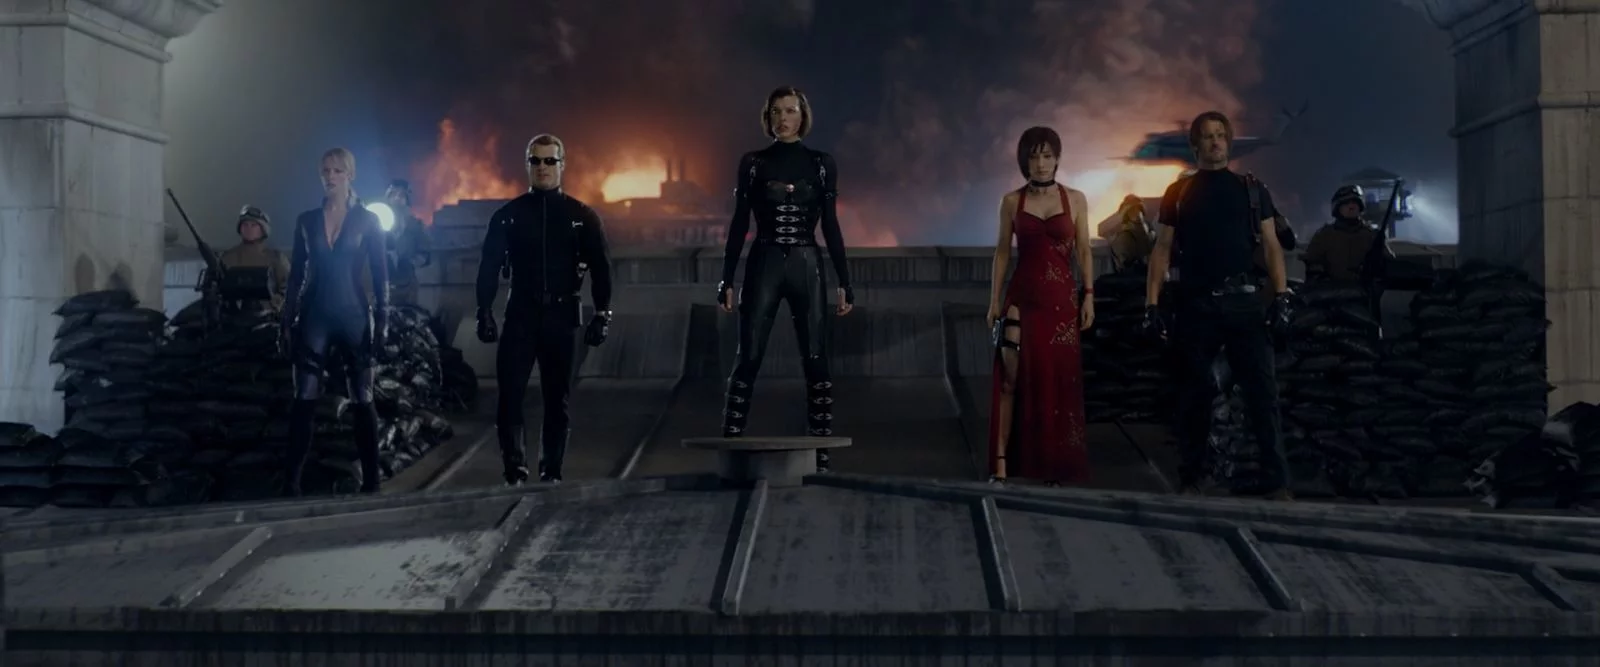 Resident Evil: The Final Chapter Trailer 4